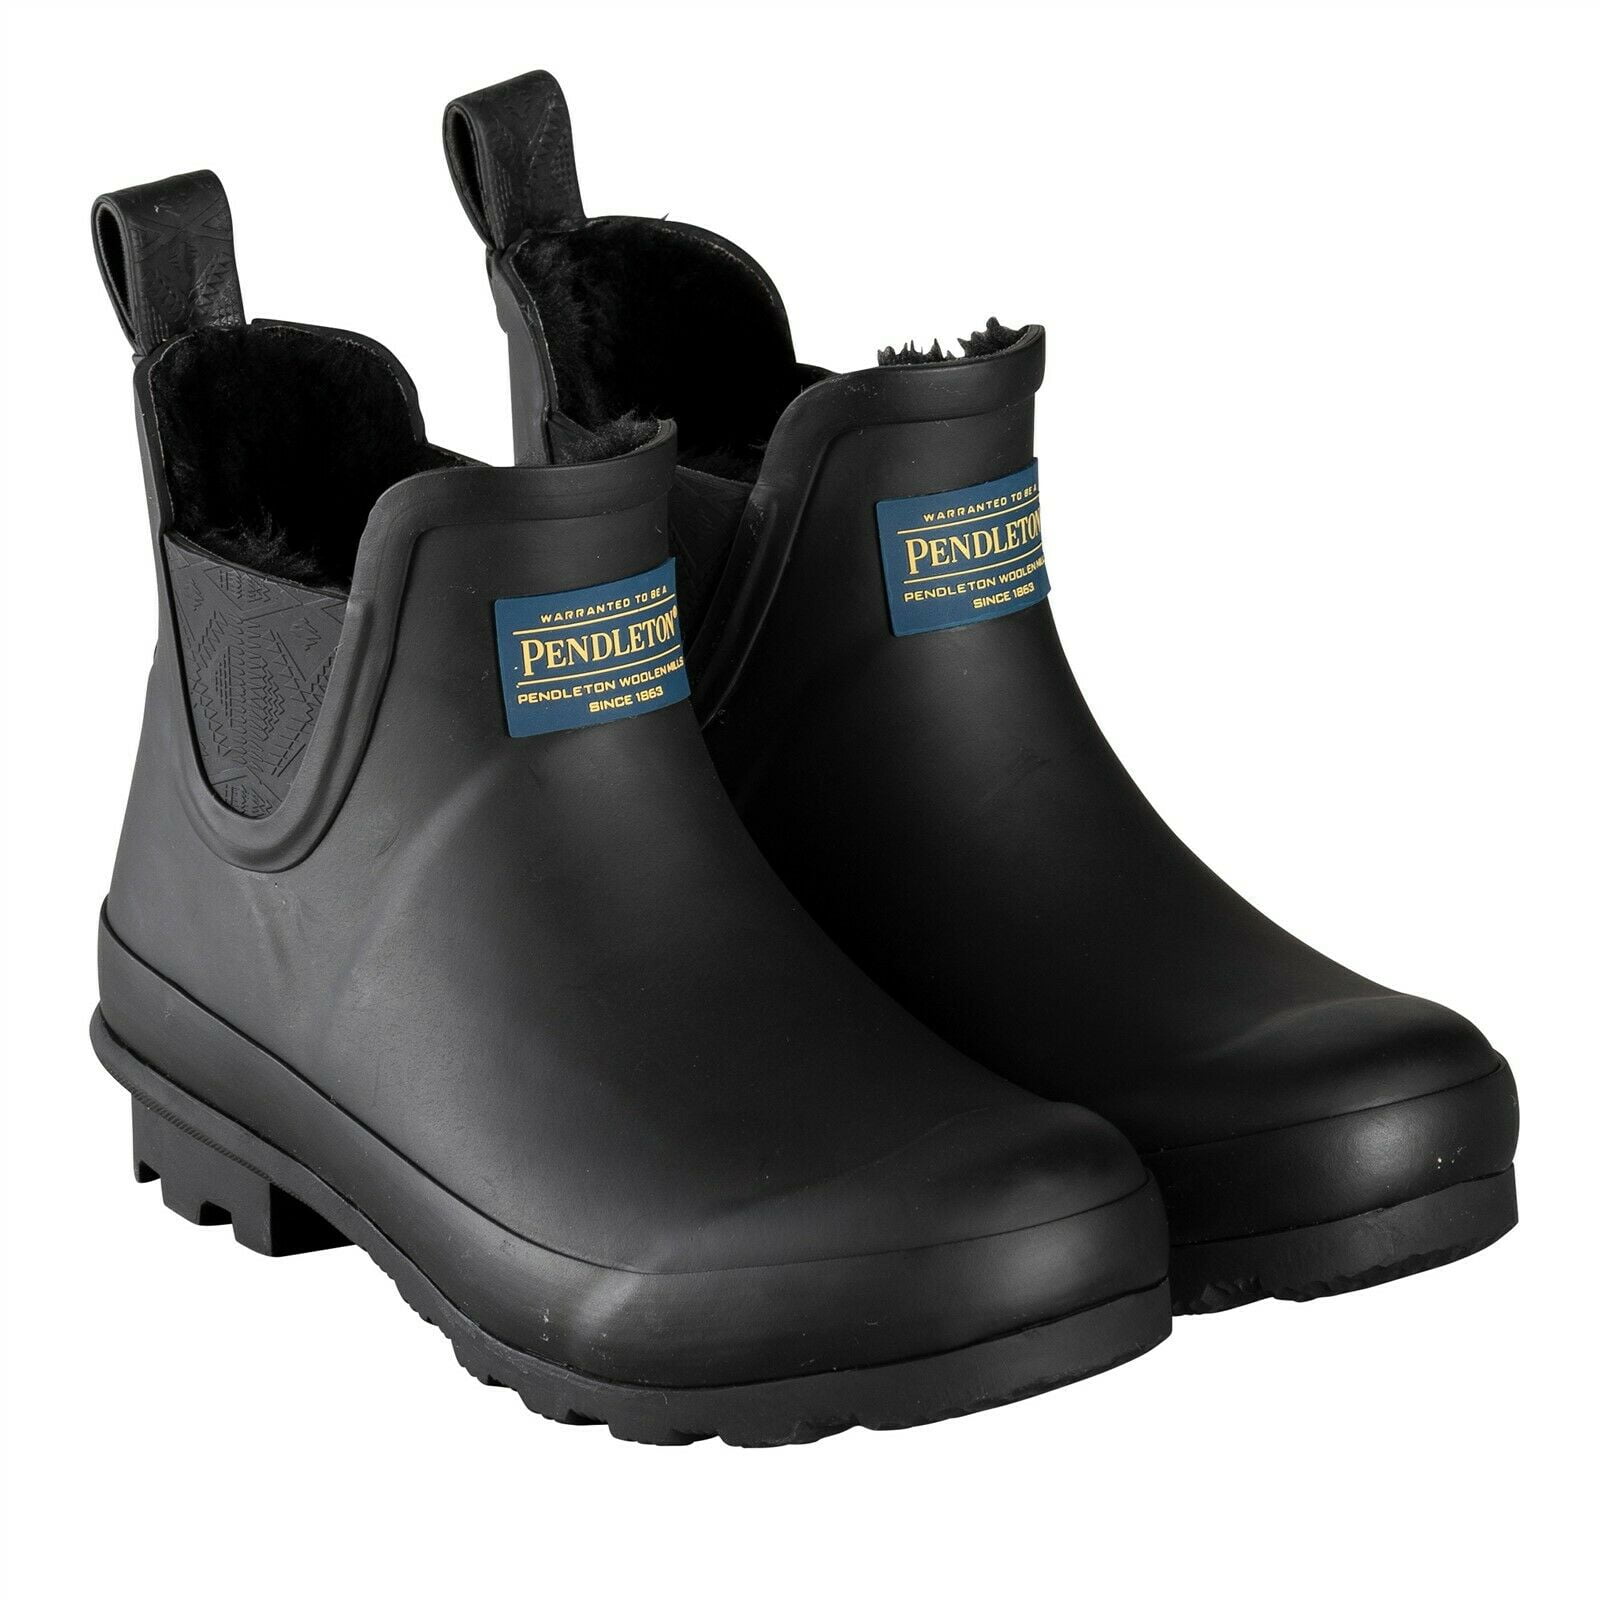 PICK SIZE BLACK 8R_12 Pendleton Women's Classic Rubber Boots Rain Boots 